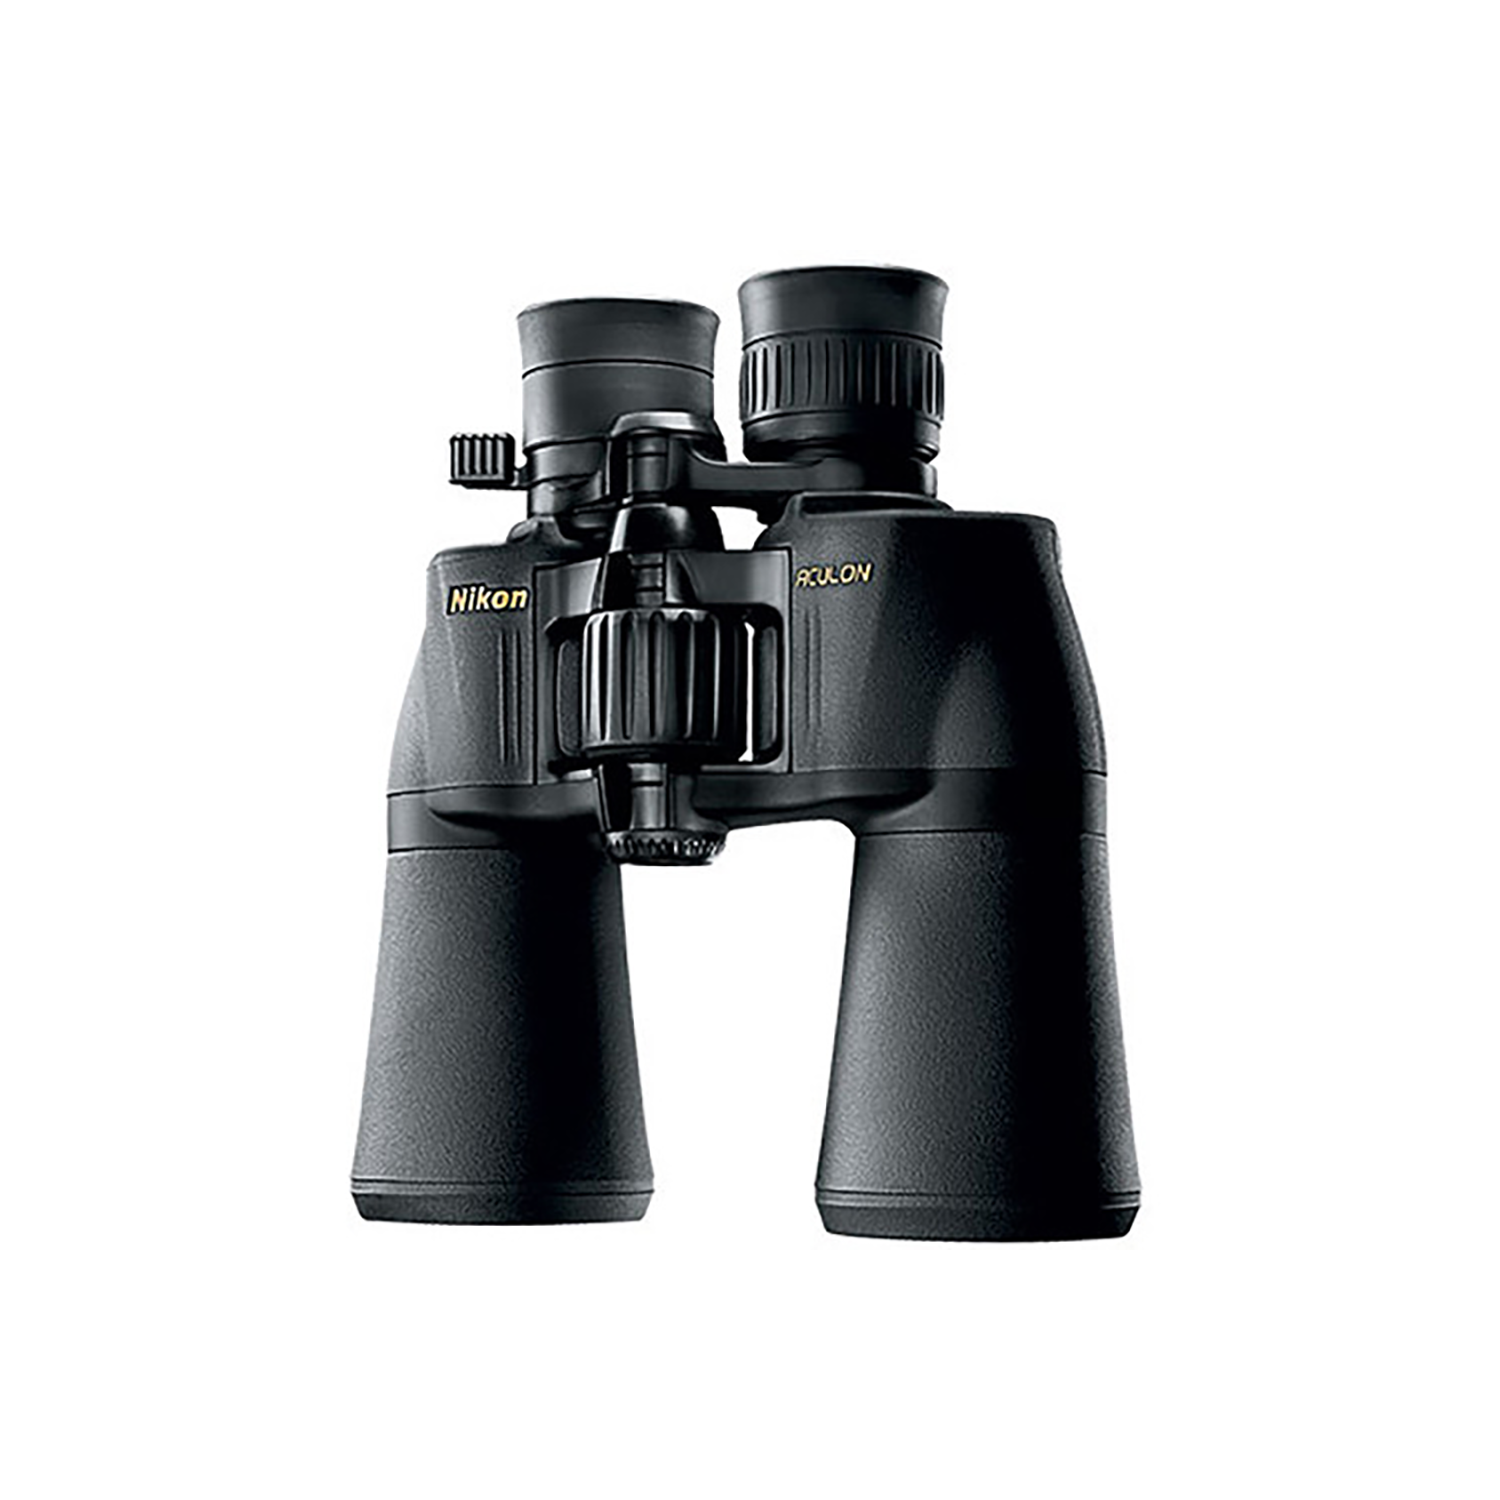 Binoculaires Nikon Aculon A211 - 10-22x50